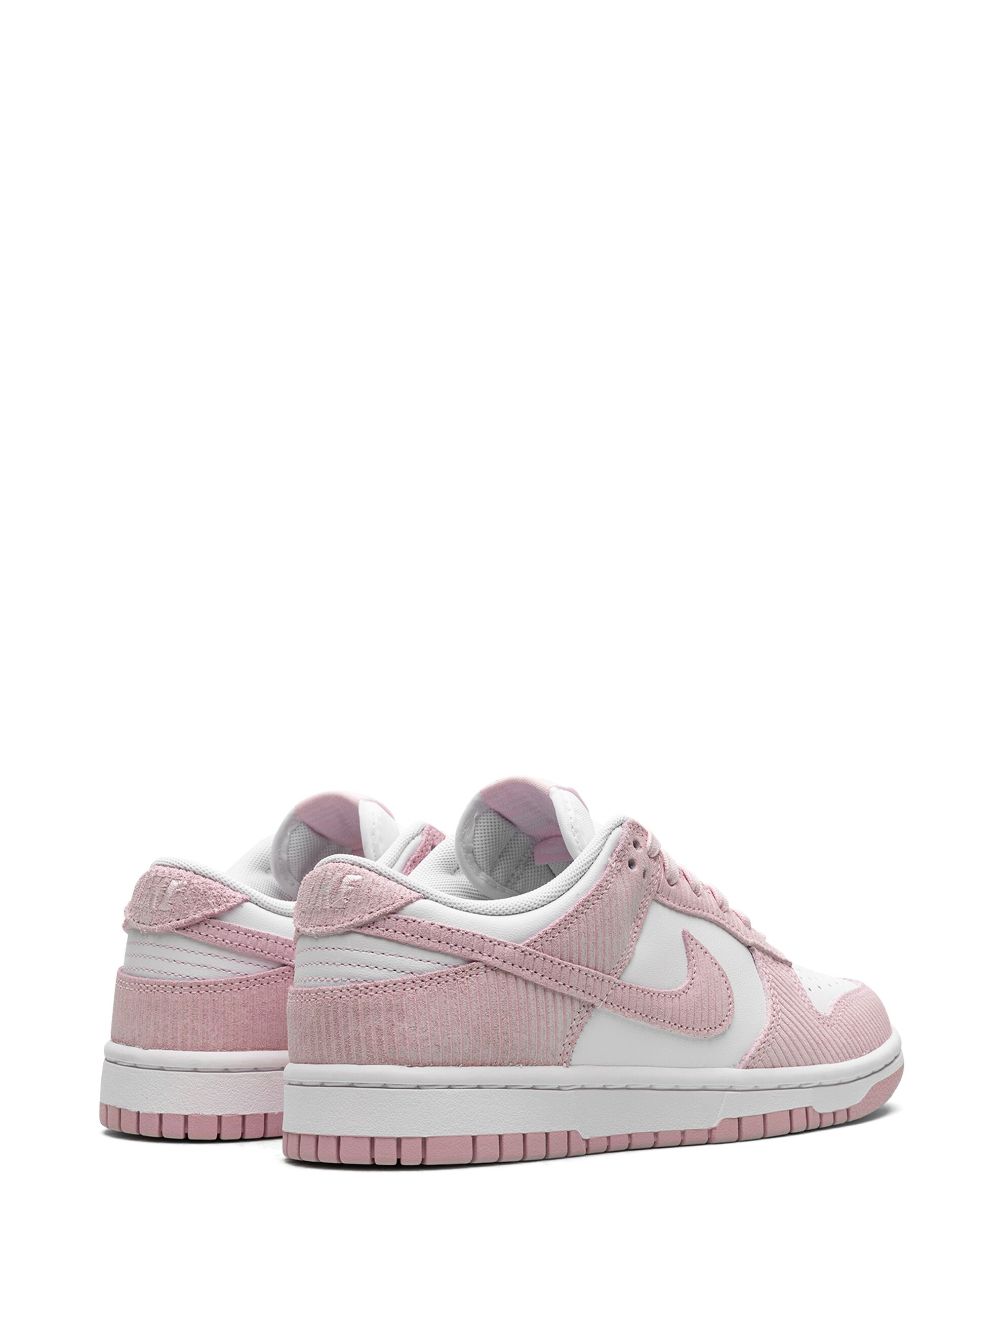 Nike Dunk Low “Pink Corduroy” sneakers